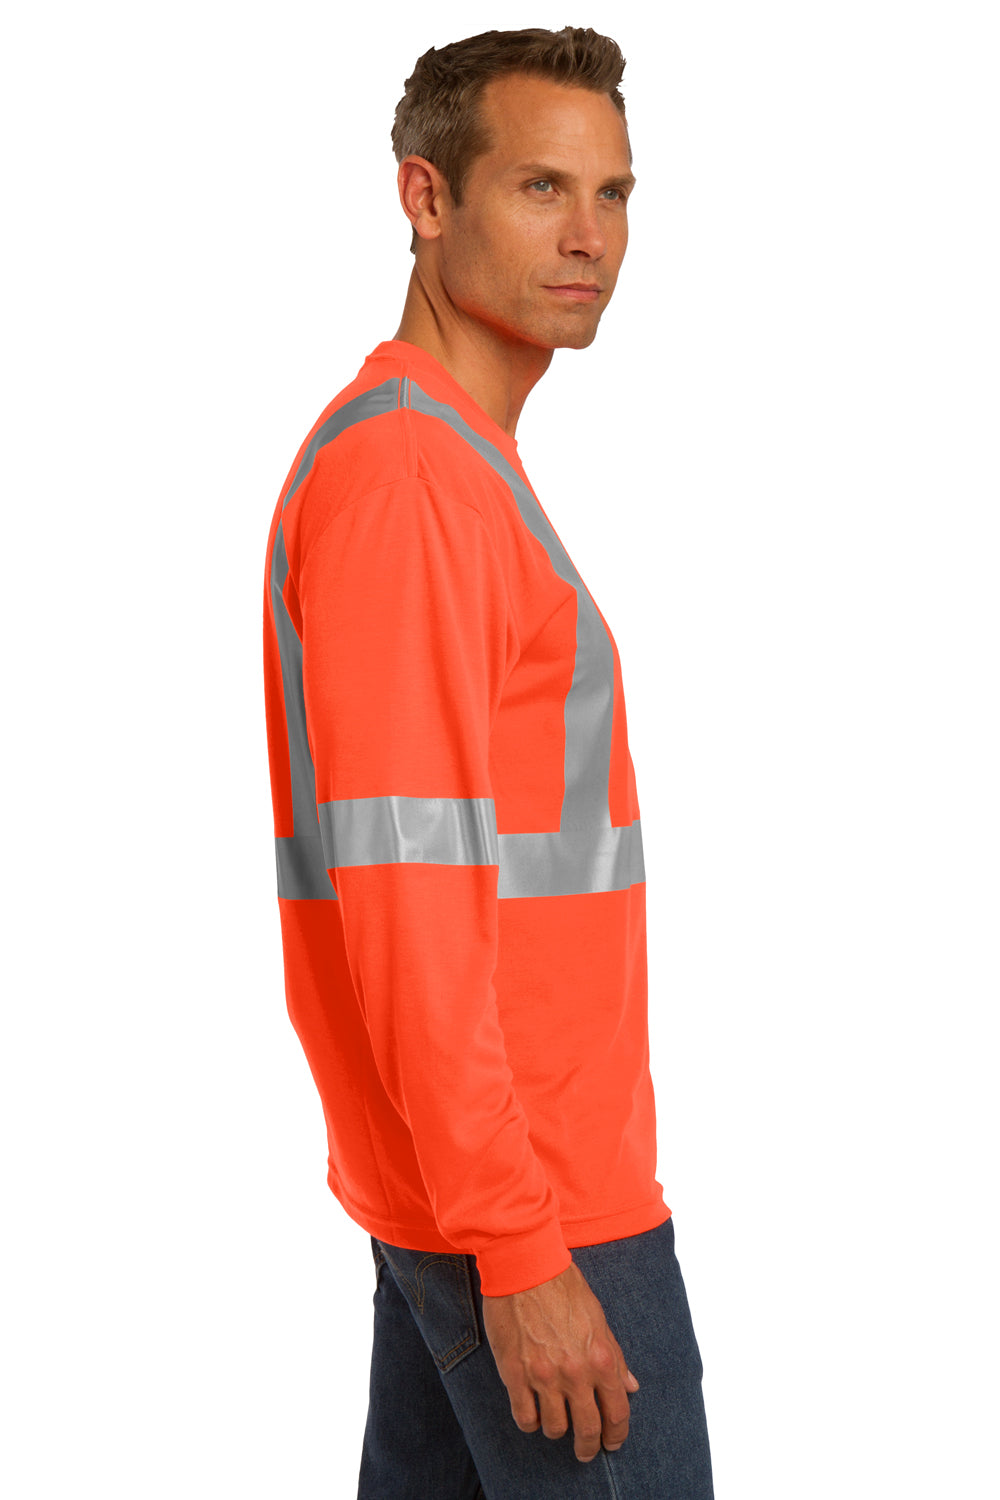 CornerStone CS401LS Mens Moisture Wicking Long Sleeve Crewneck T-Shirt w/ Pocket Safety Orange Side